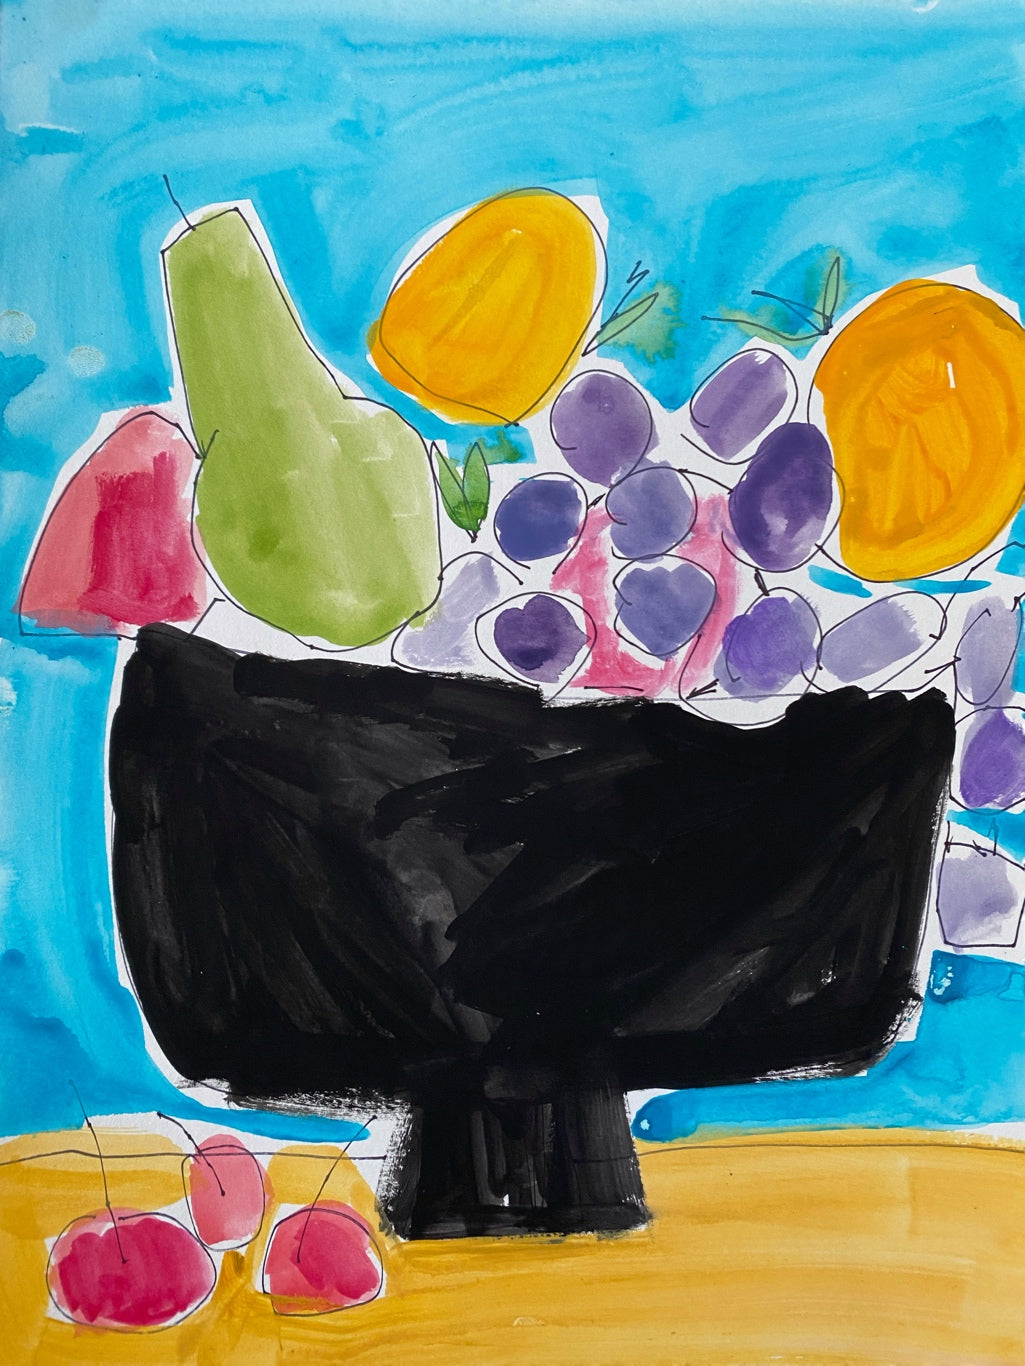 Fruit Bowl on Teal / Original Gouache colour study on 9”x12” paper / Sheryl Siddiqui